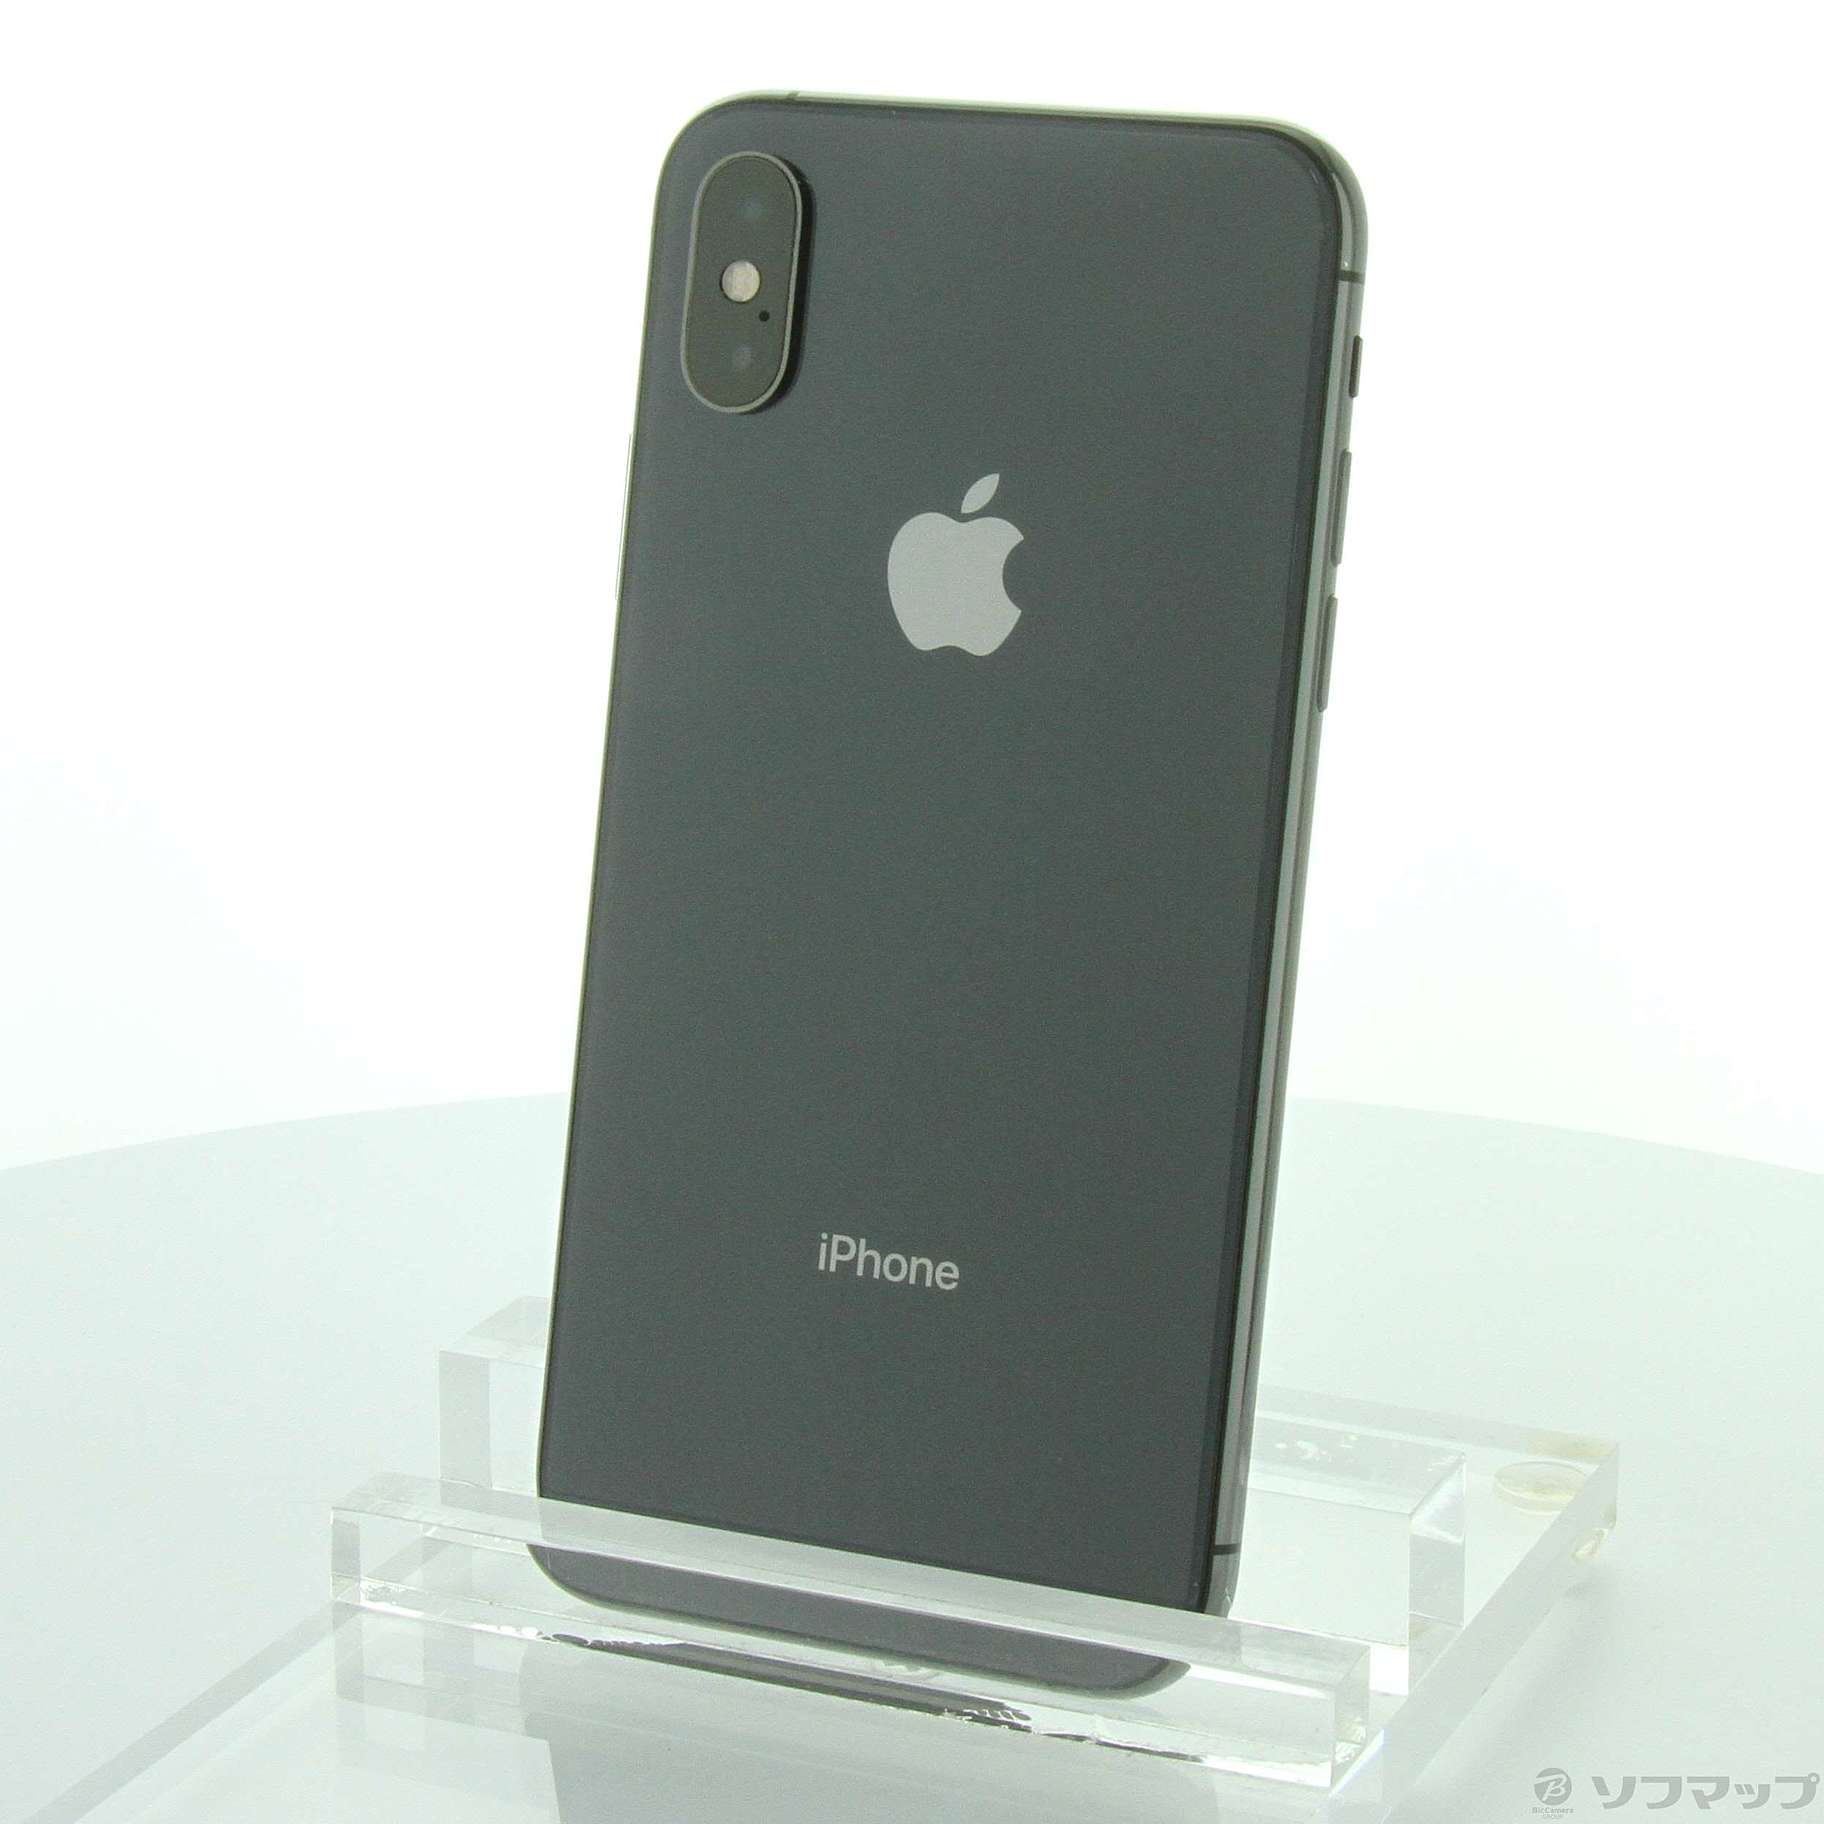 iPhone Xs Max Space Gray 256 GB Softbank - スマートフォン本体